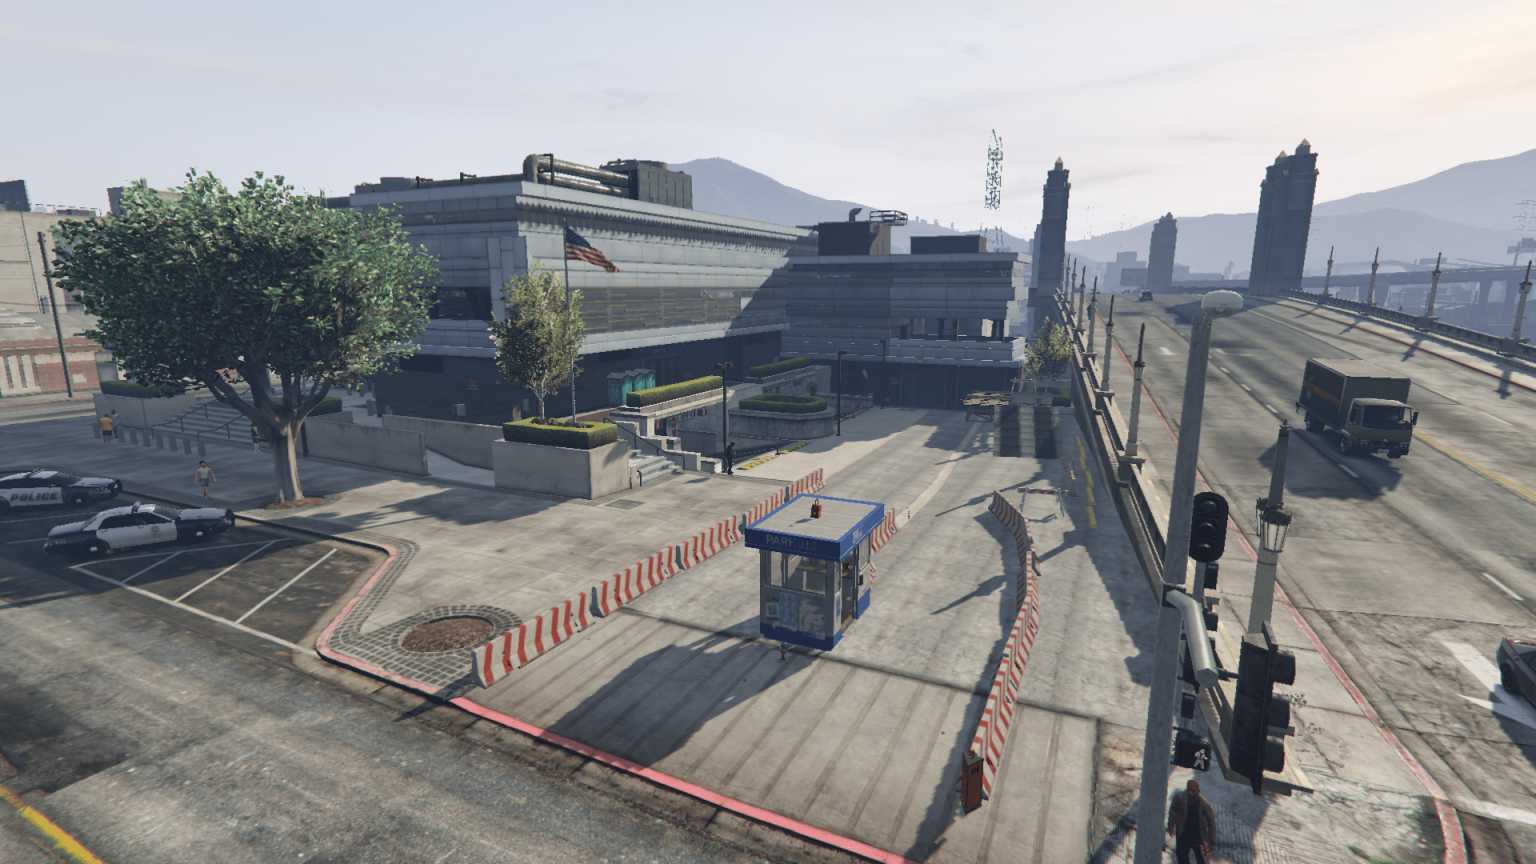 Police Station Mission Row 1.0 – GTA 5 mod